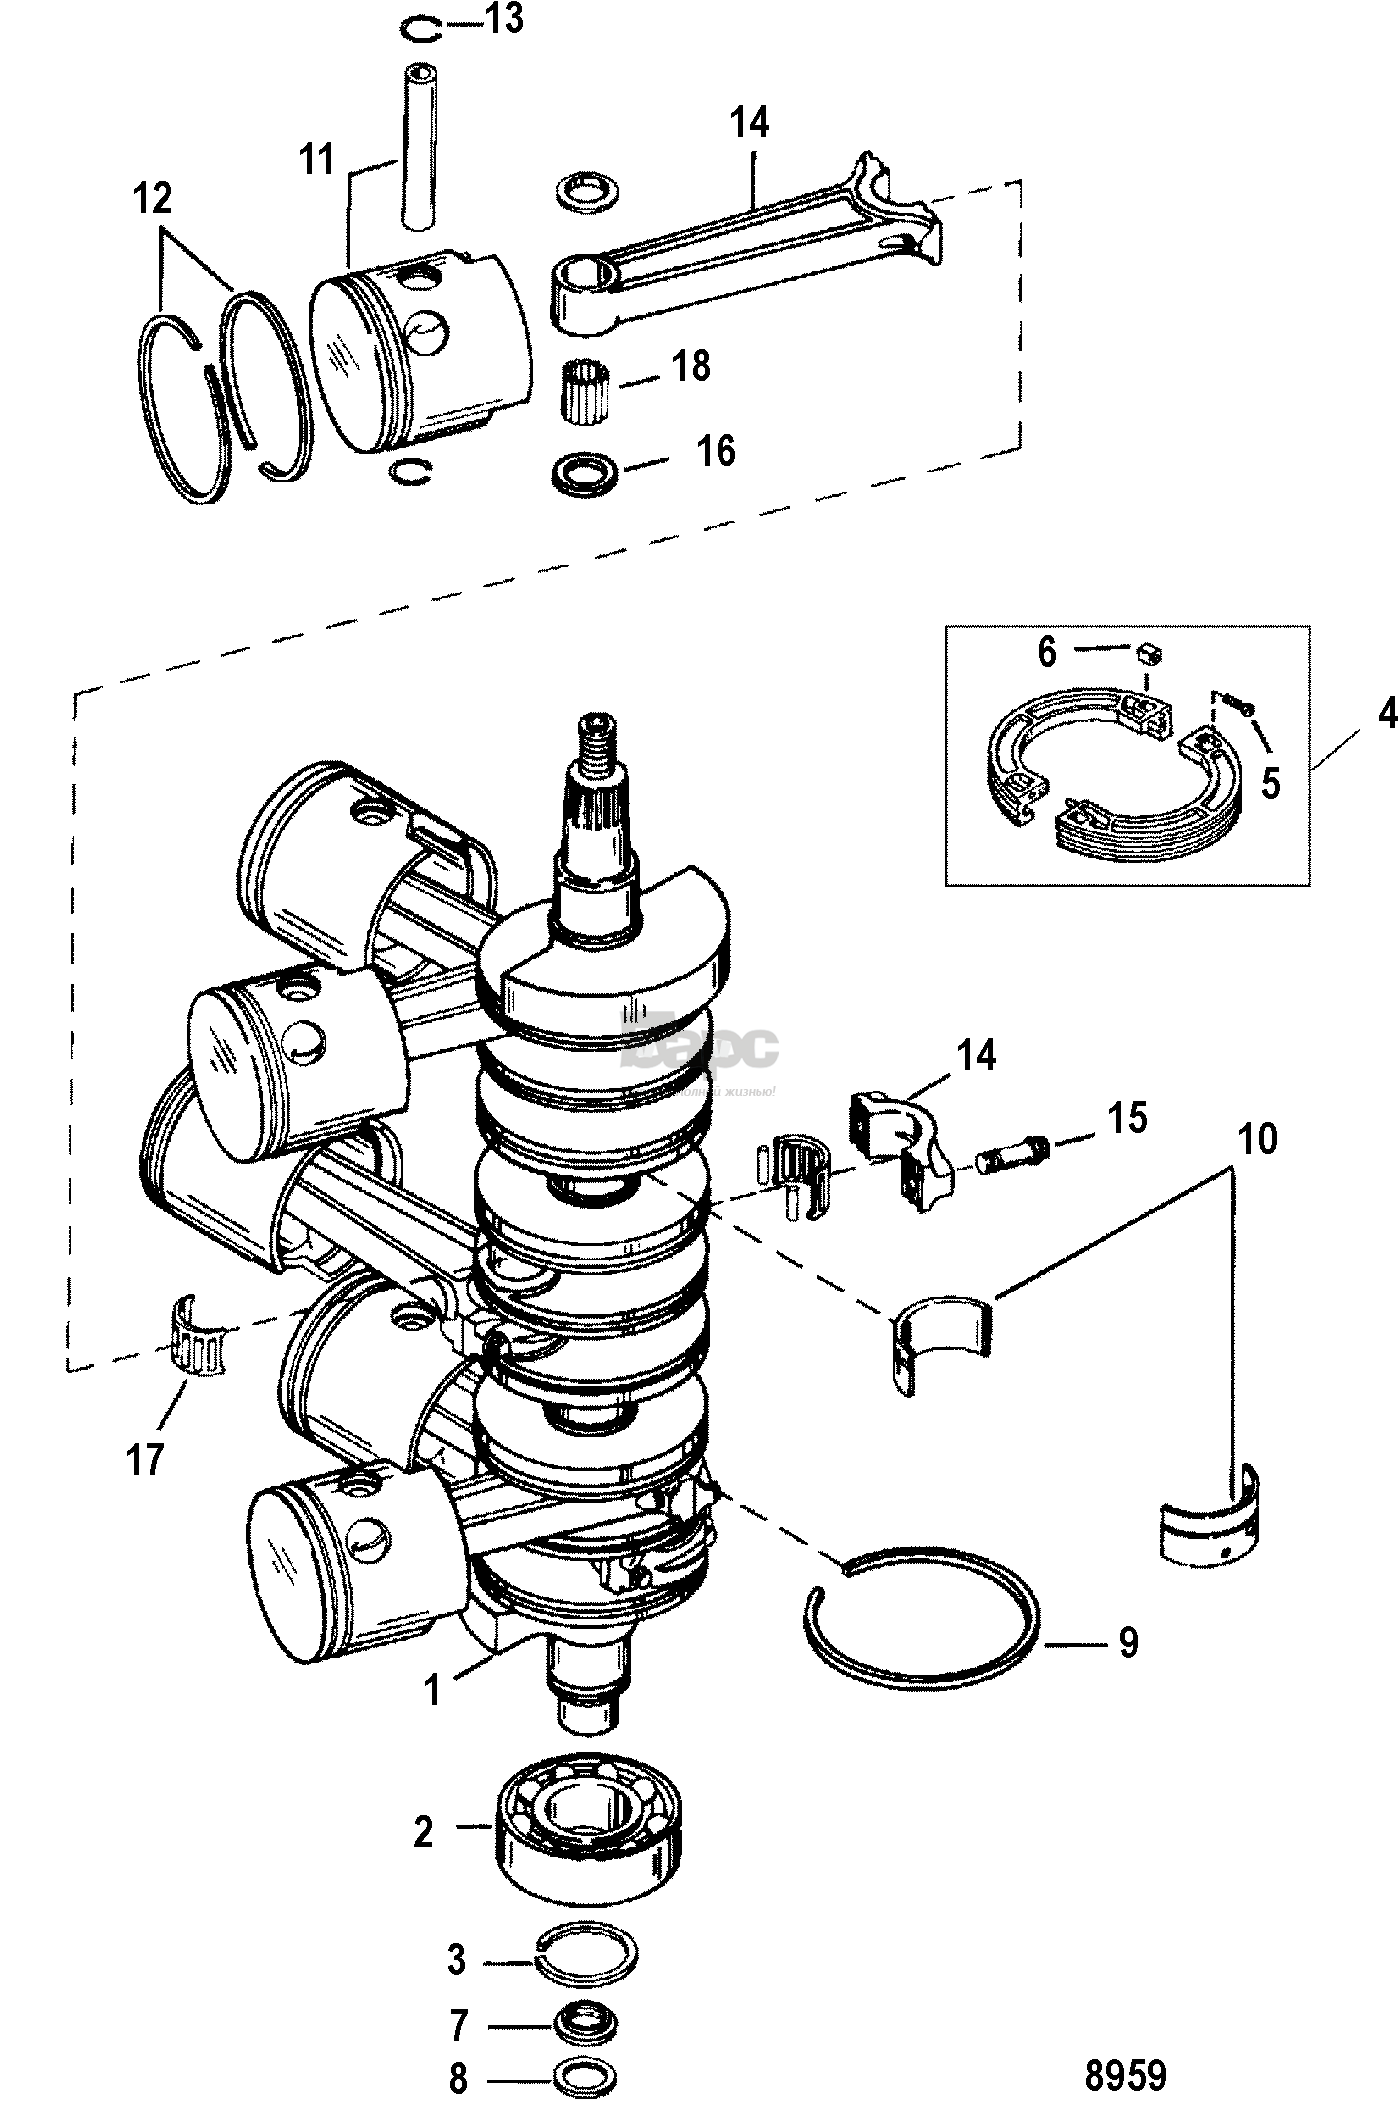 Crankshaft(Connecting Rod Forging # is 644-818141)